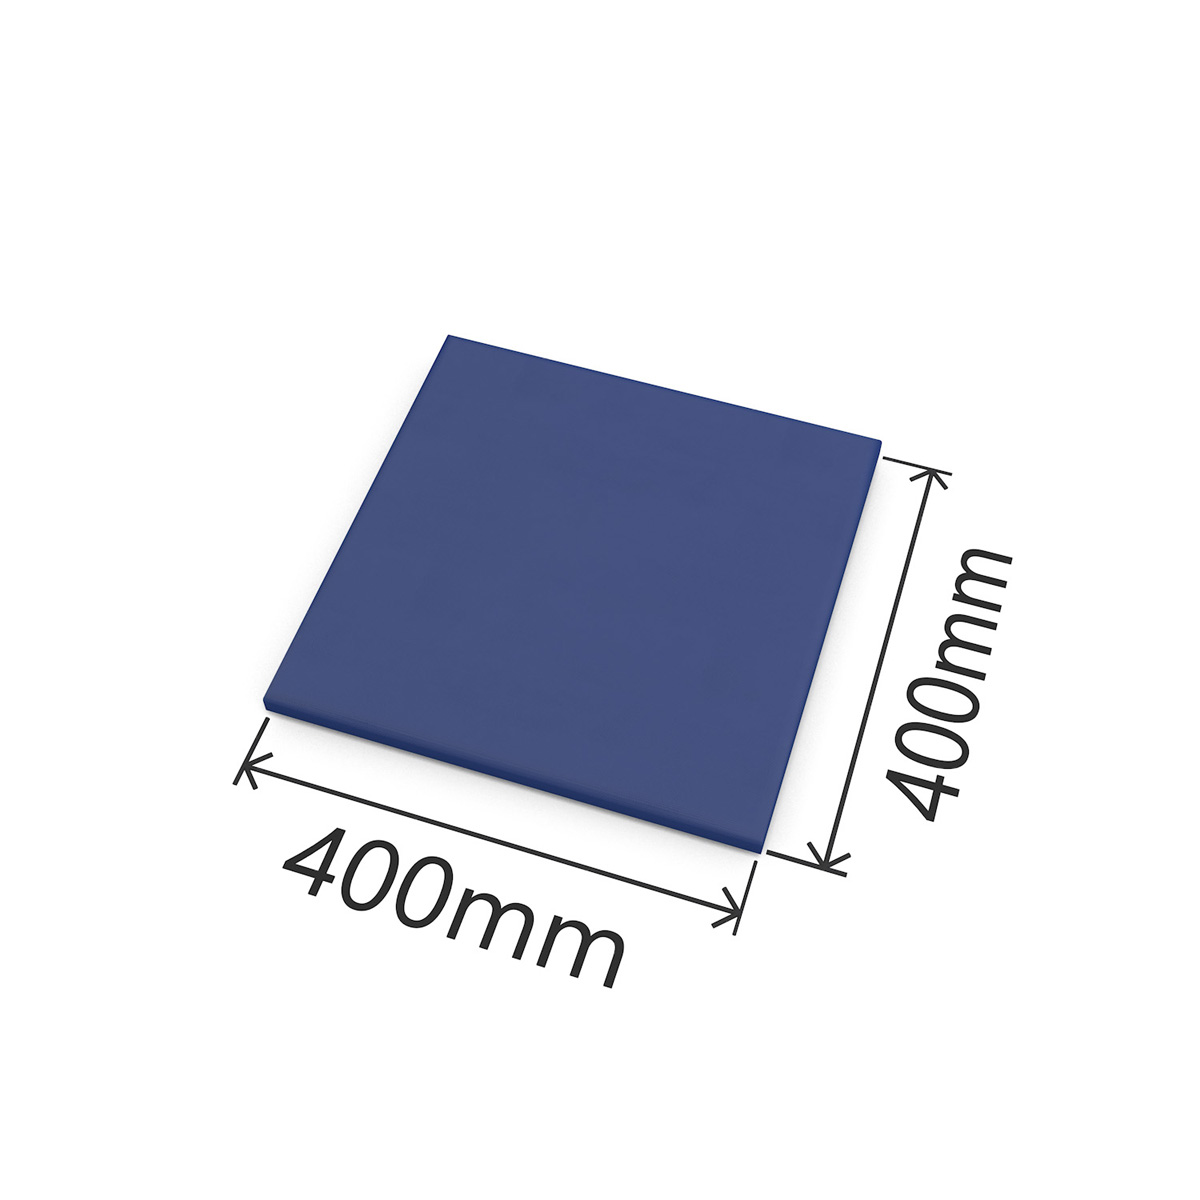 Dimensions of QUADRUM™ Square Acoustic Panels For Walls